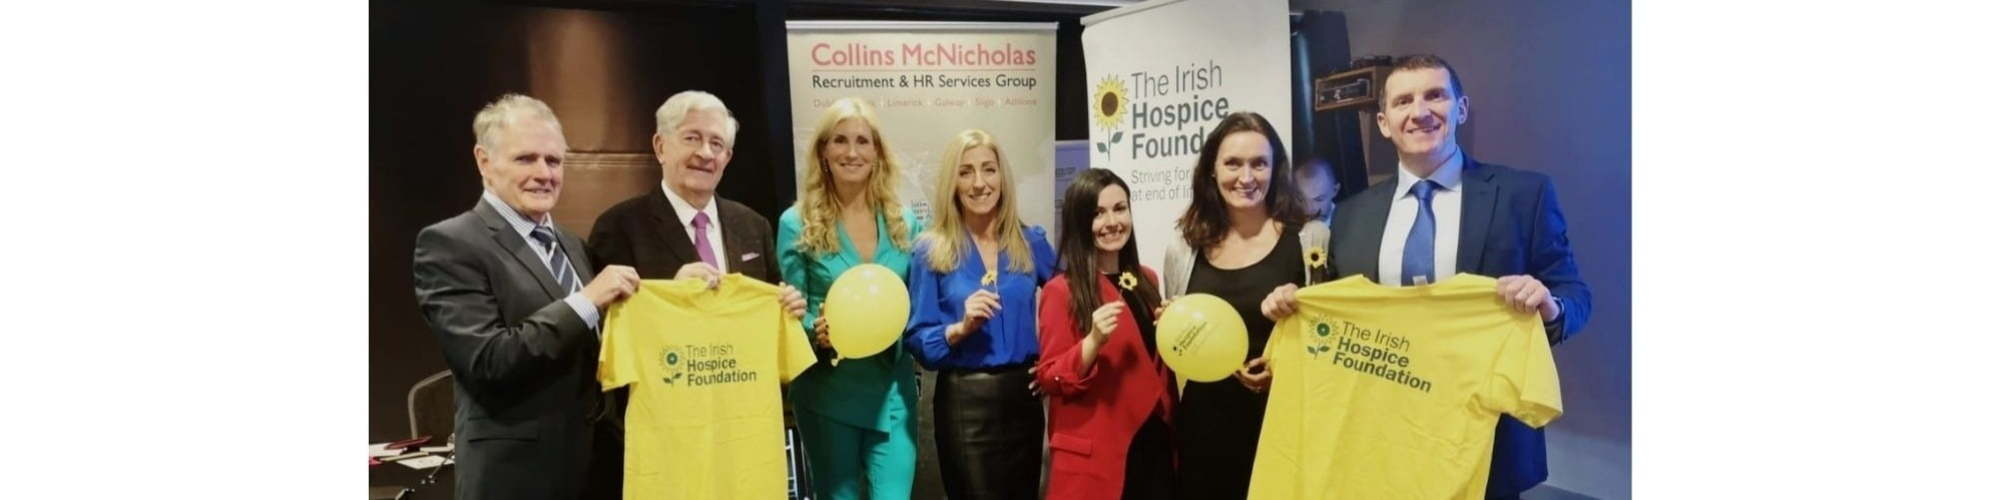 Irish Hospice Foundation Banner